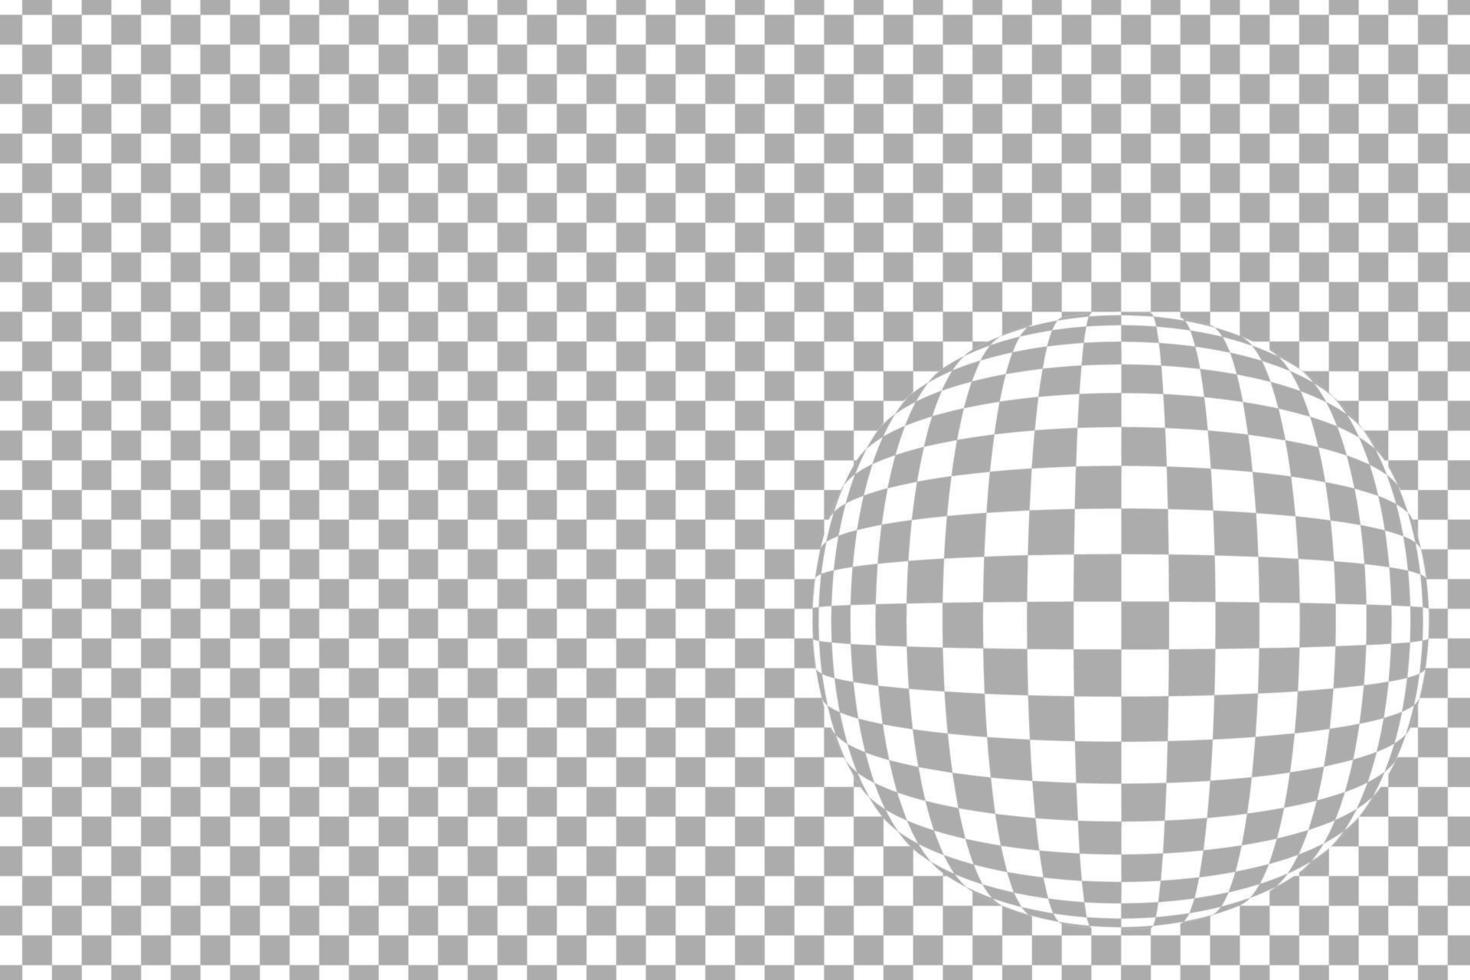 Gray checkered pattern horizontal with fisheye lens effect, vector illustration